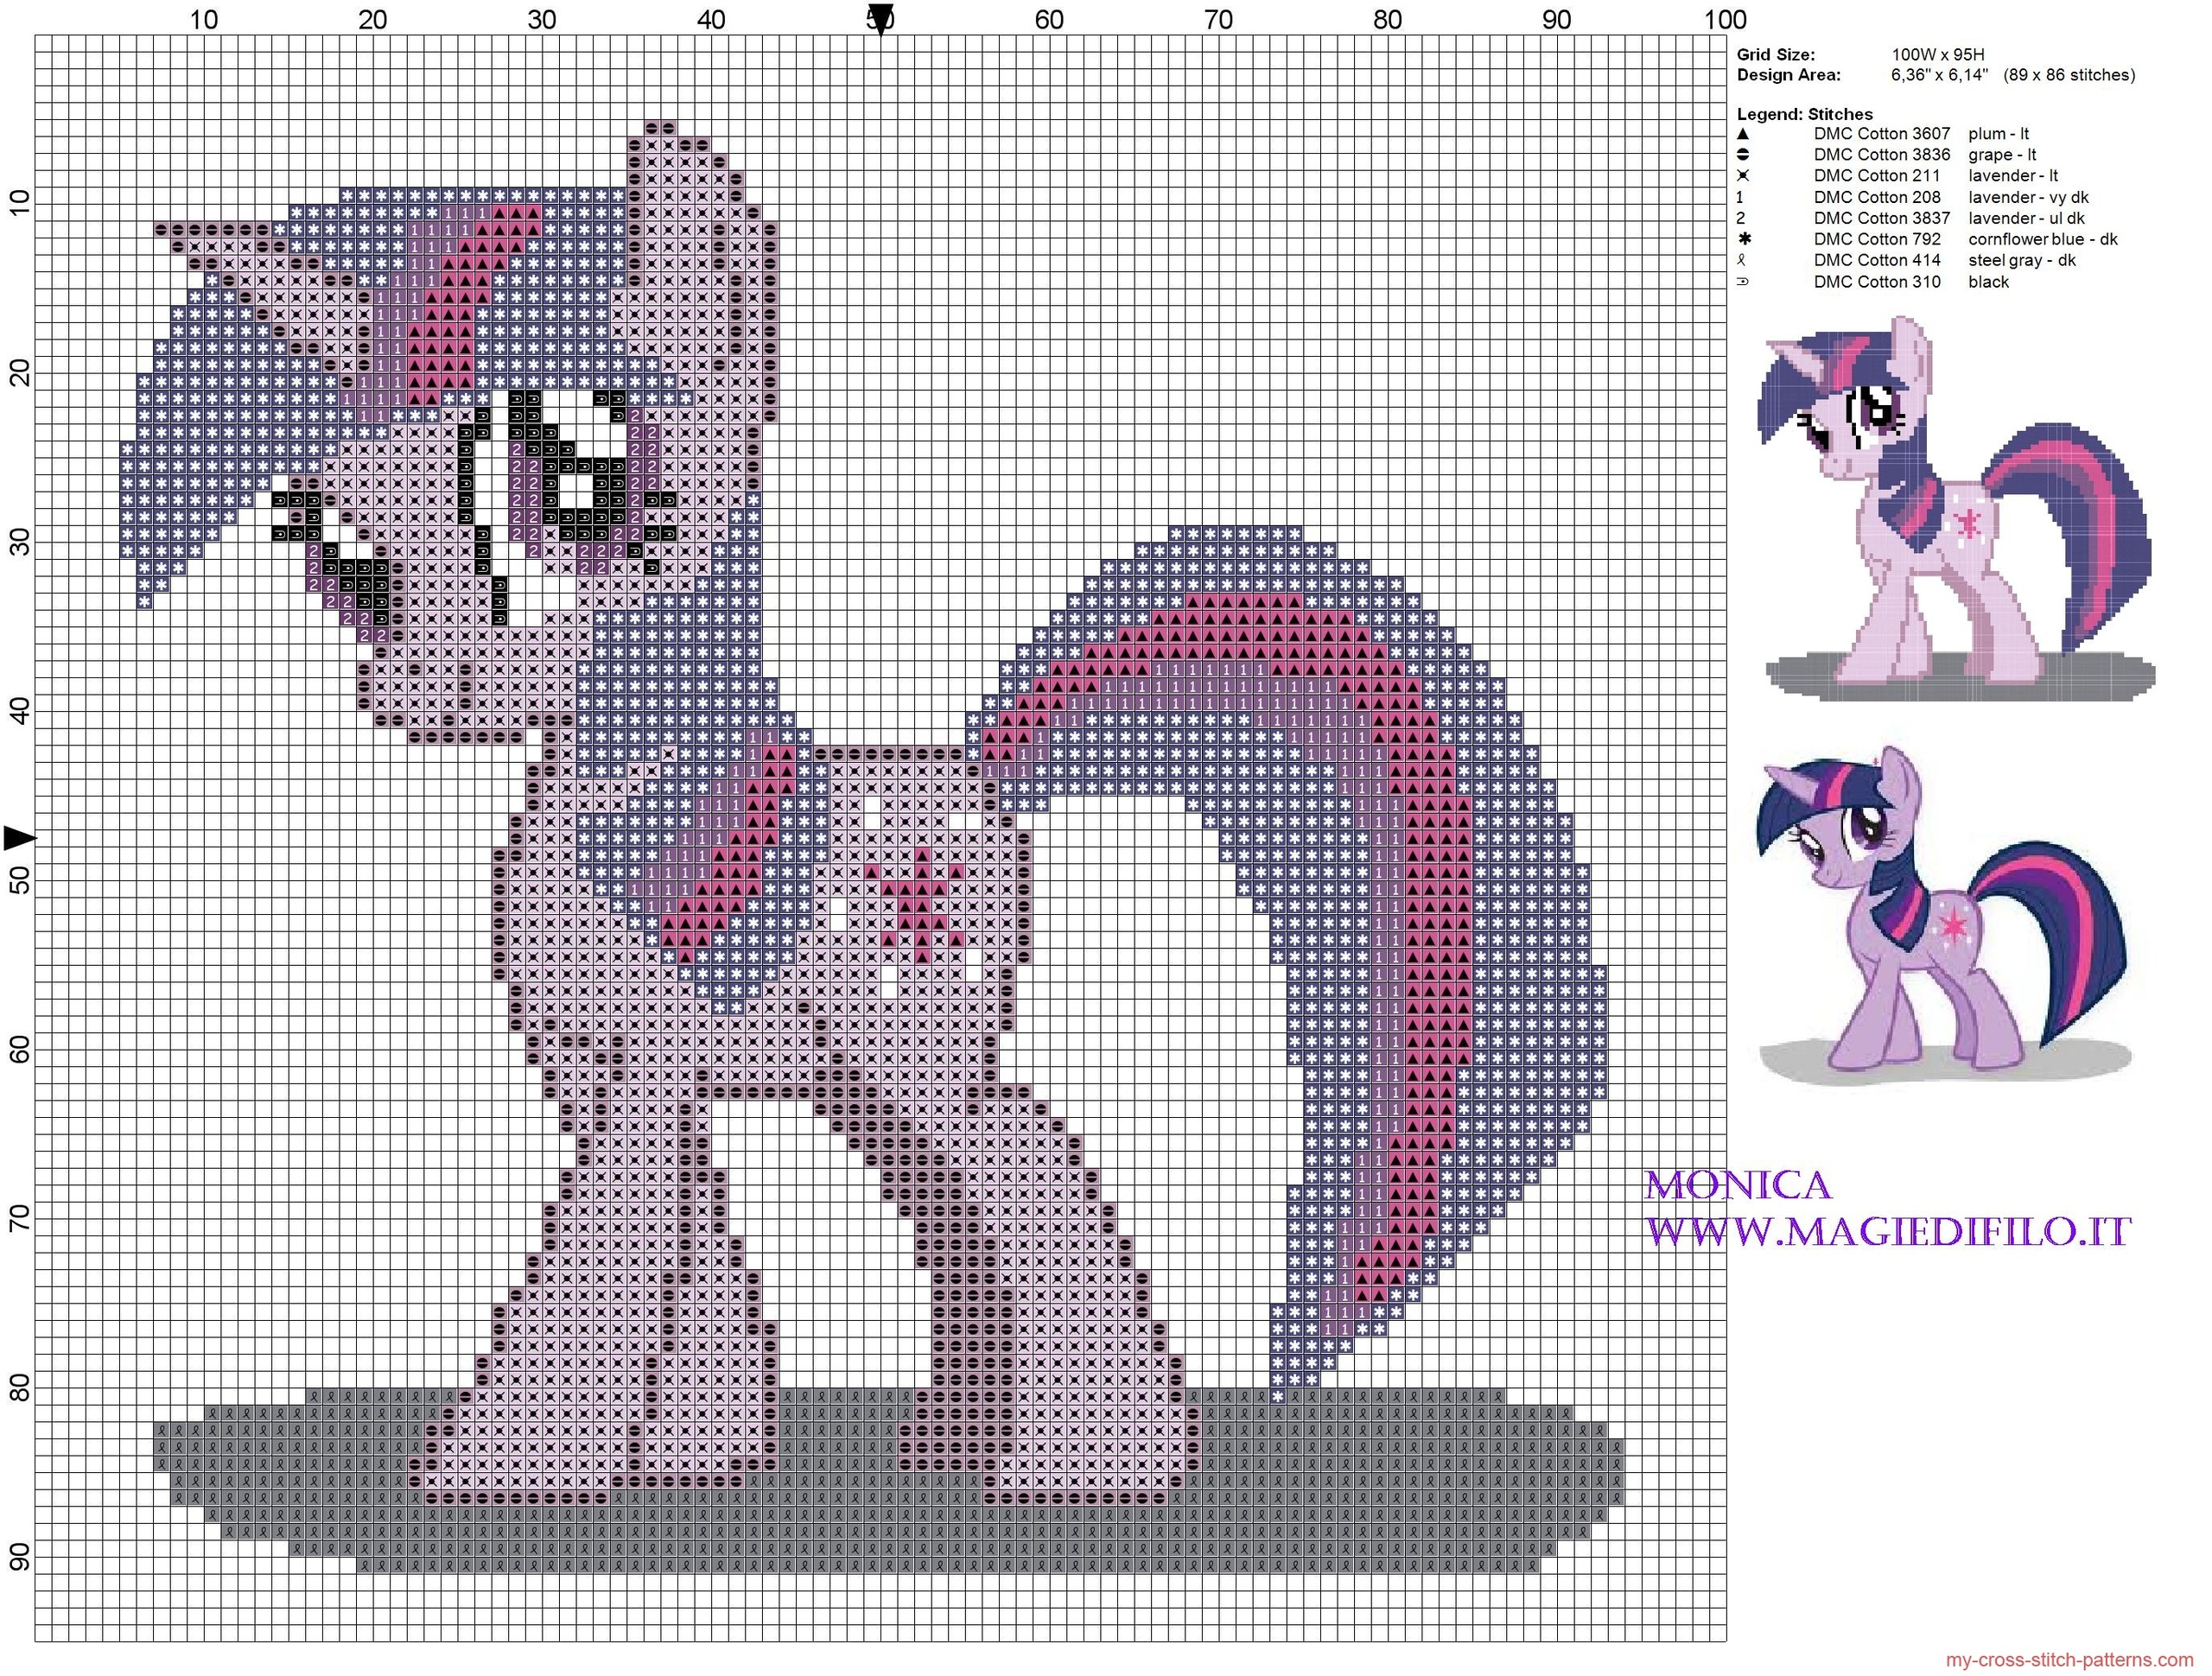 twilight_my_little_pony_cross_stitch_pattern_2